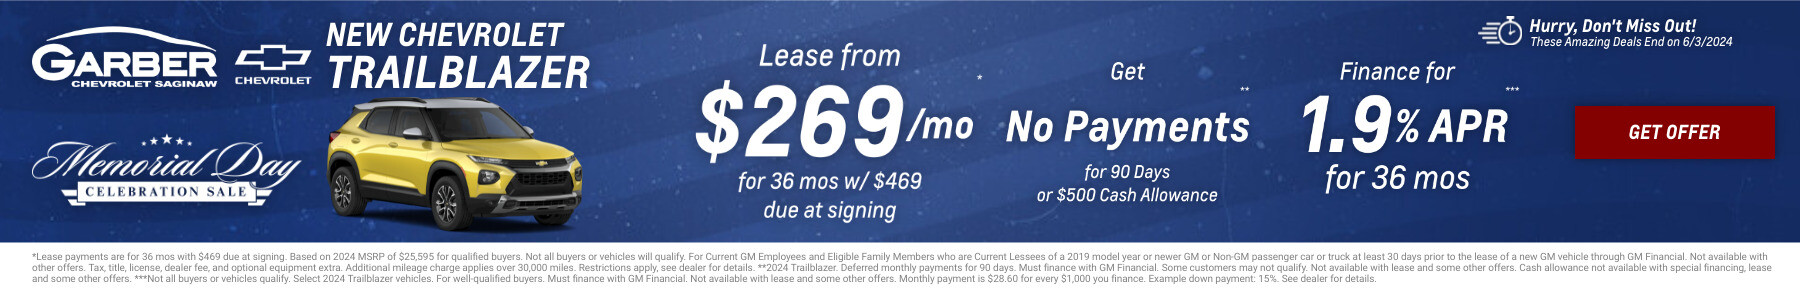 New Chevrolet Trailblazer Current Deals and Offers in Saginaw, MI